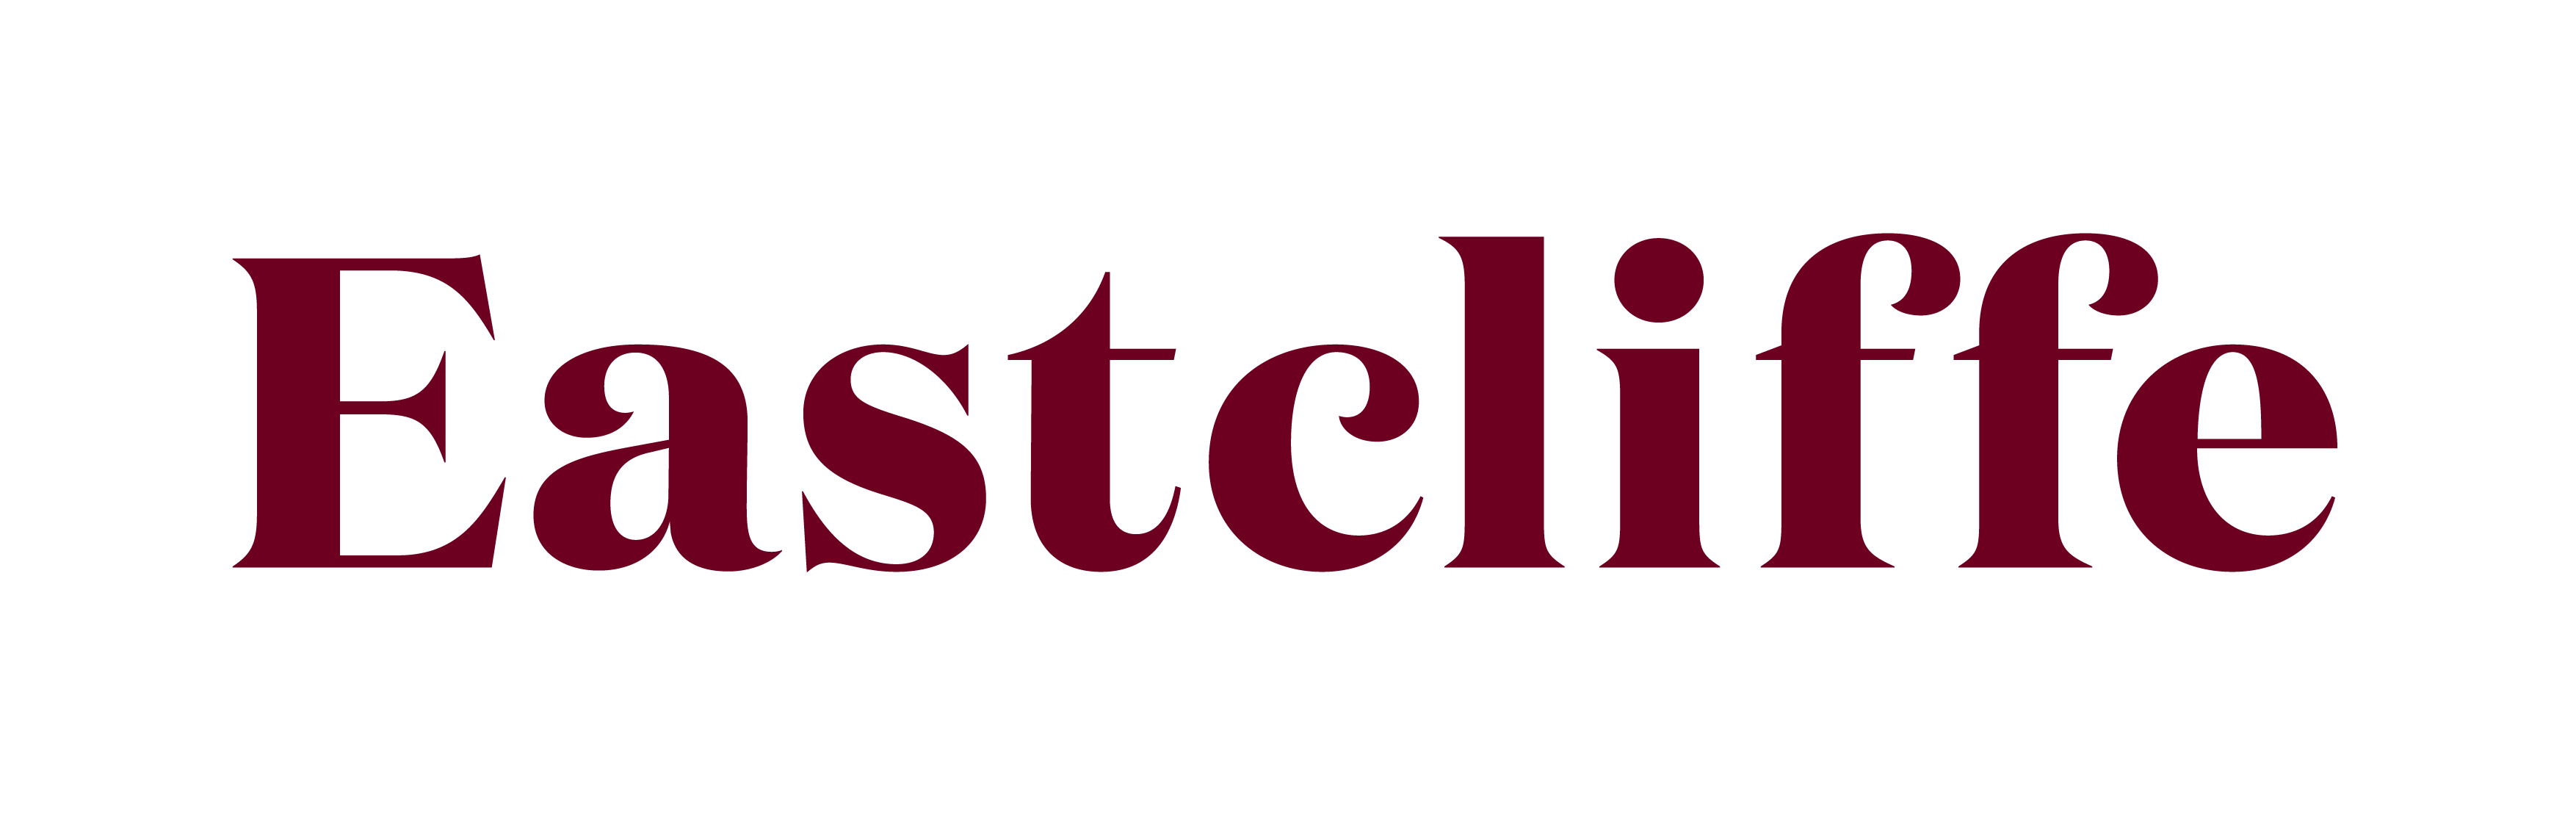 Eastcliffe logo